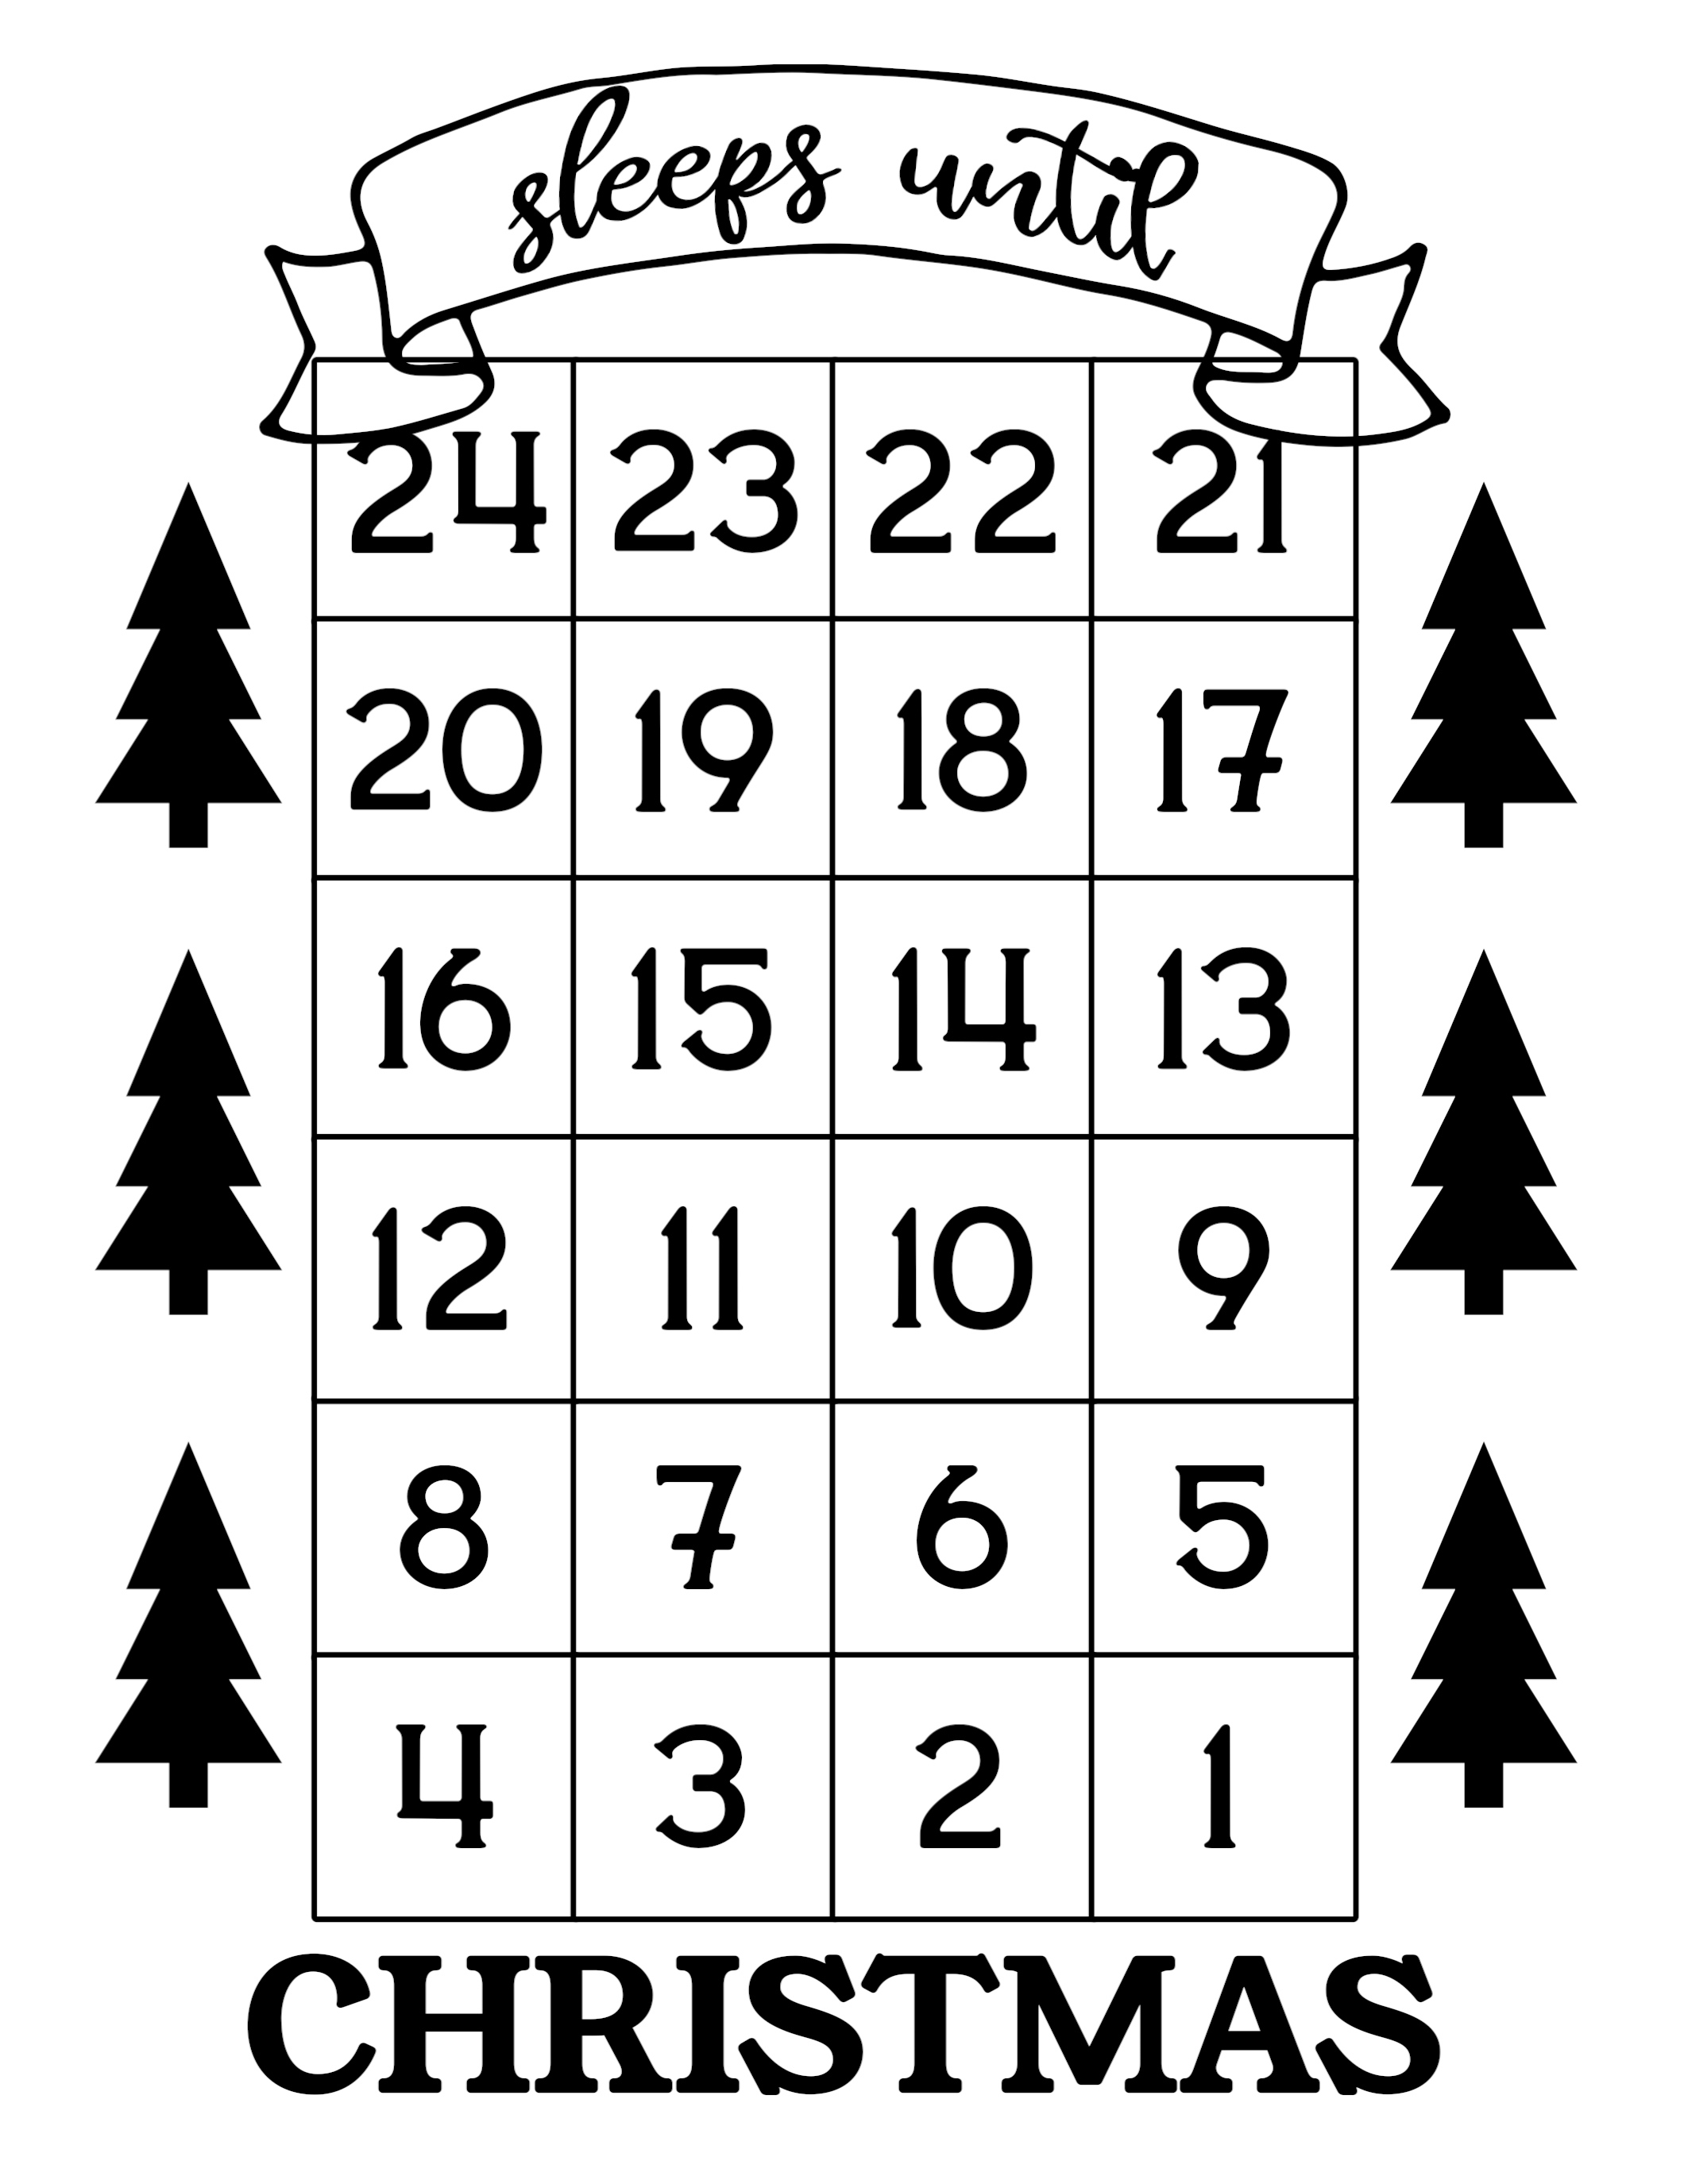 How Many Days Until Christmas Free Printable - Paper Trail Printable Countdown To Christmas Calendar 2020